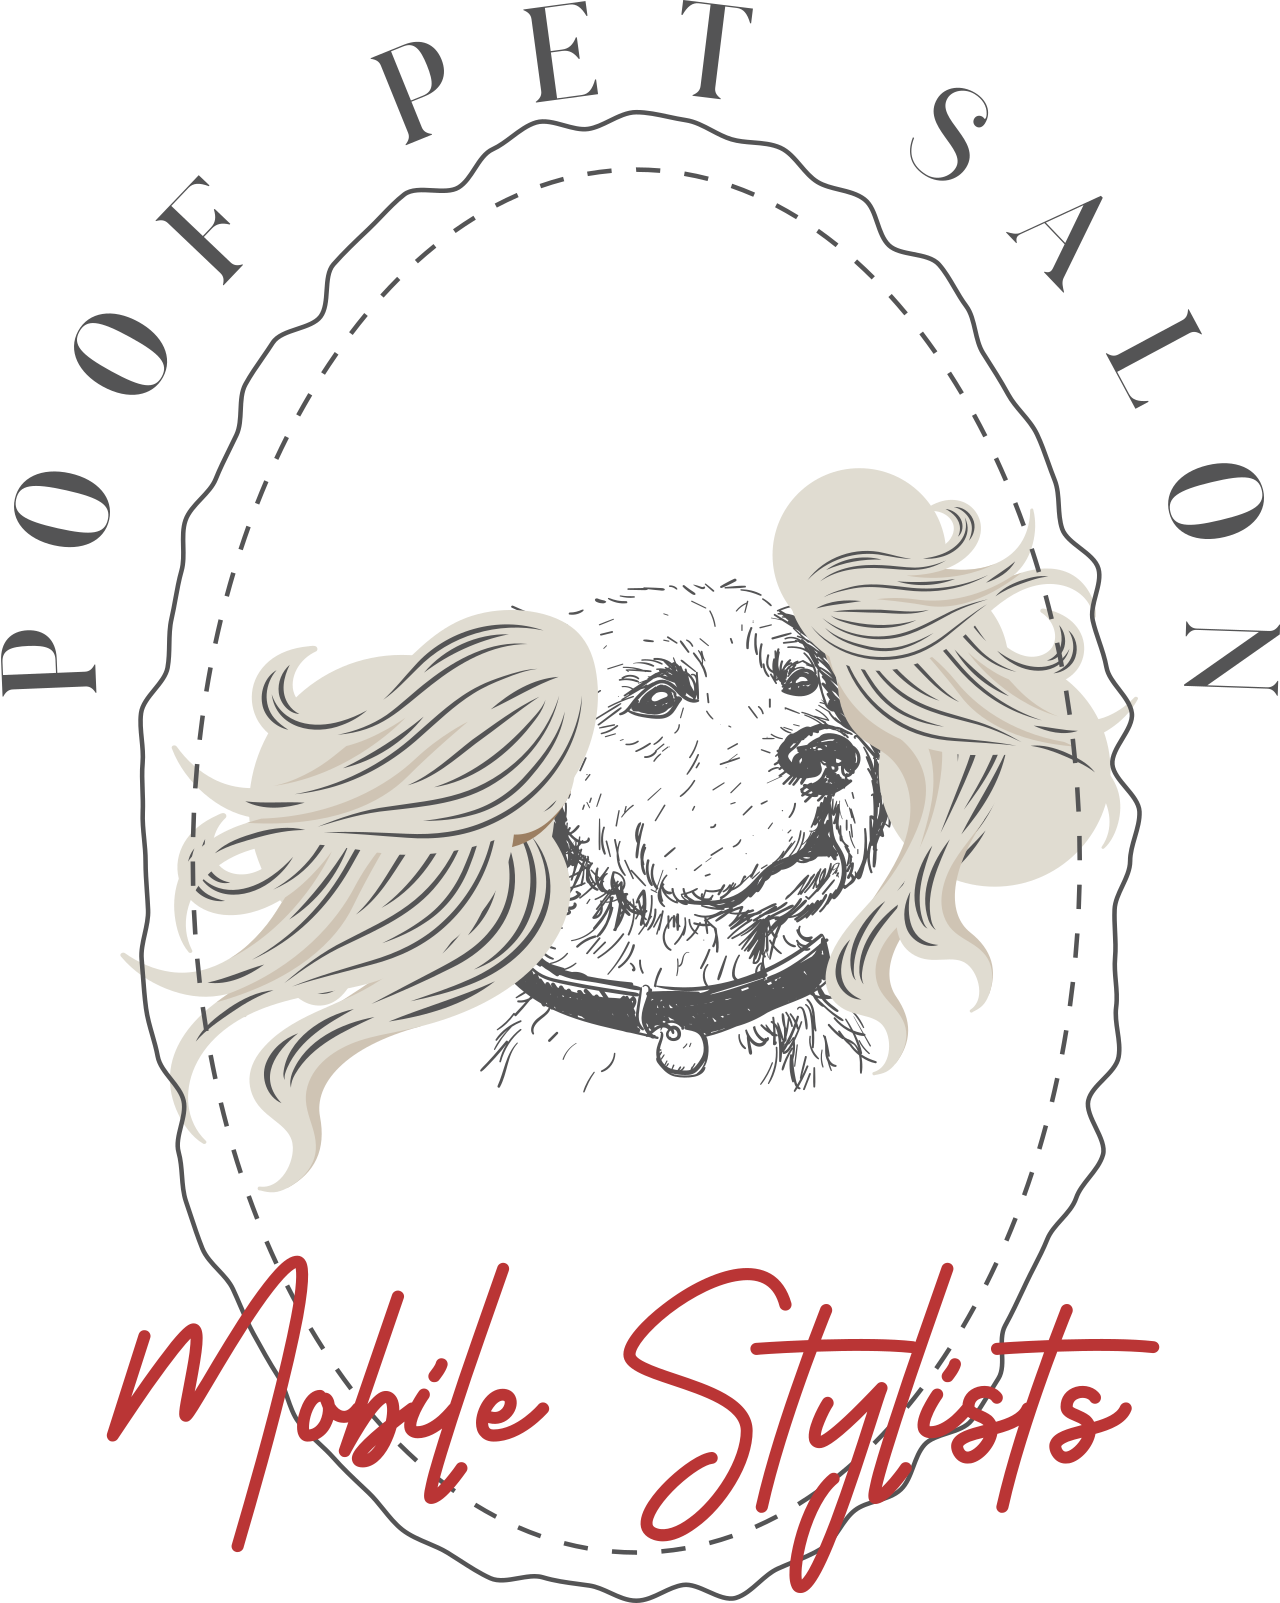 POOF PET SALON's logo